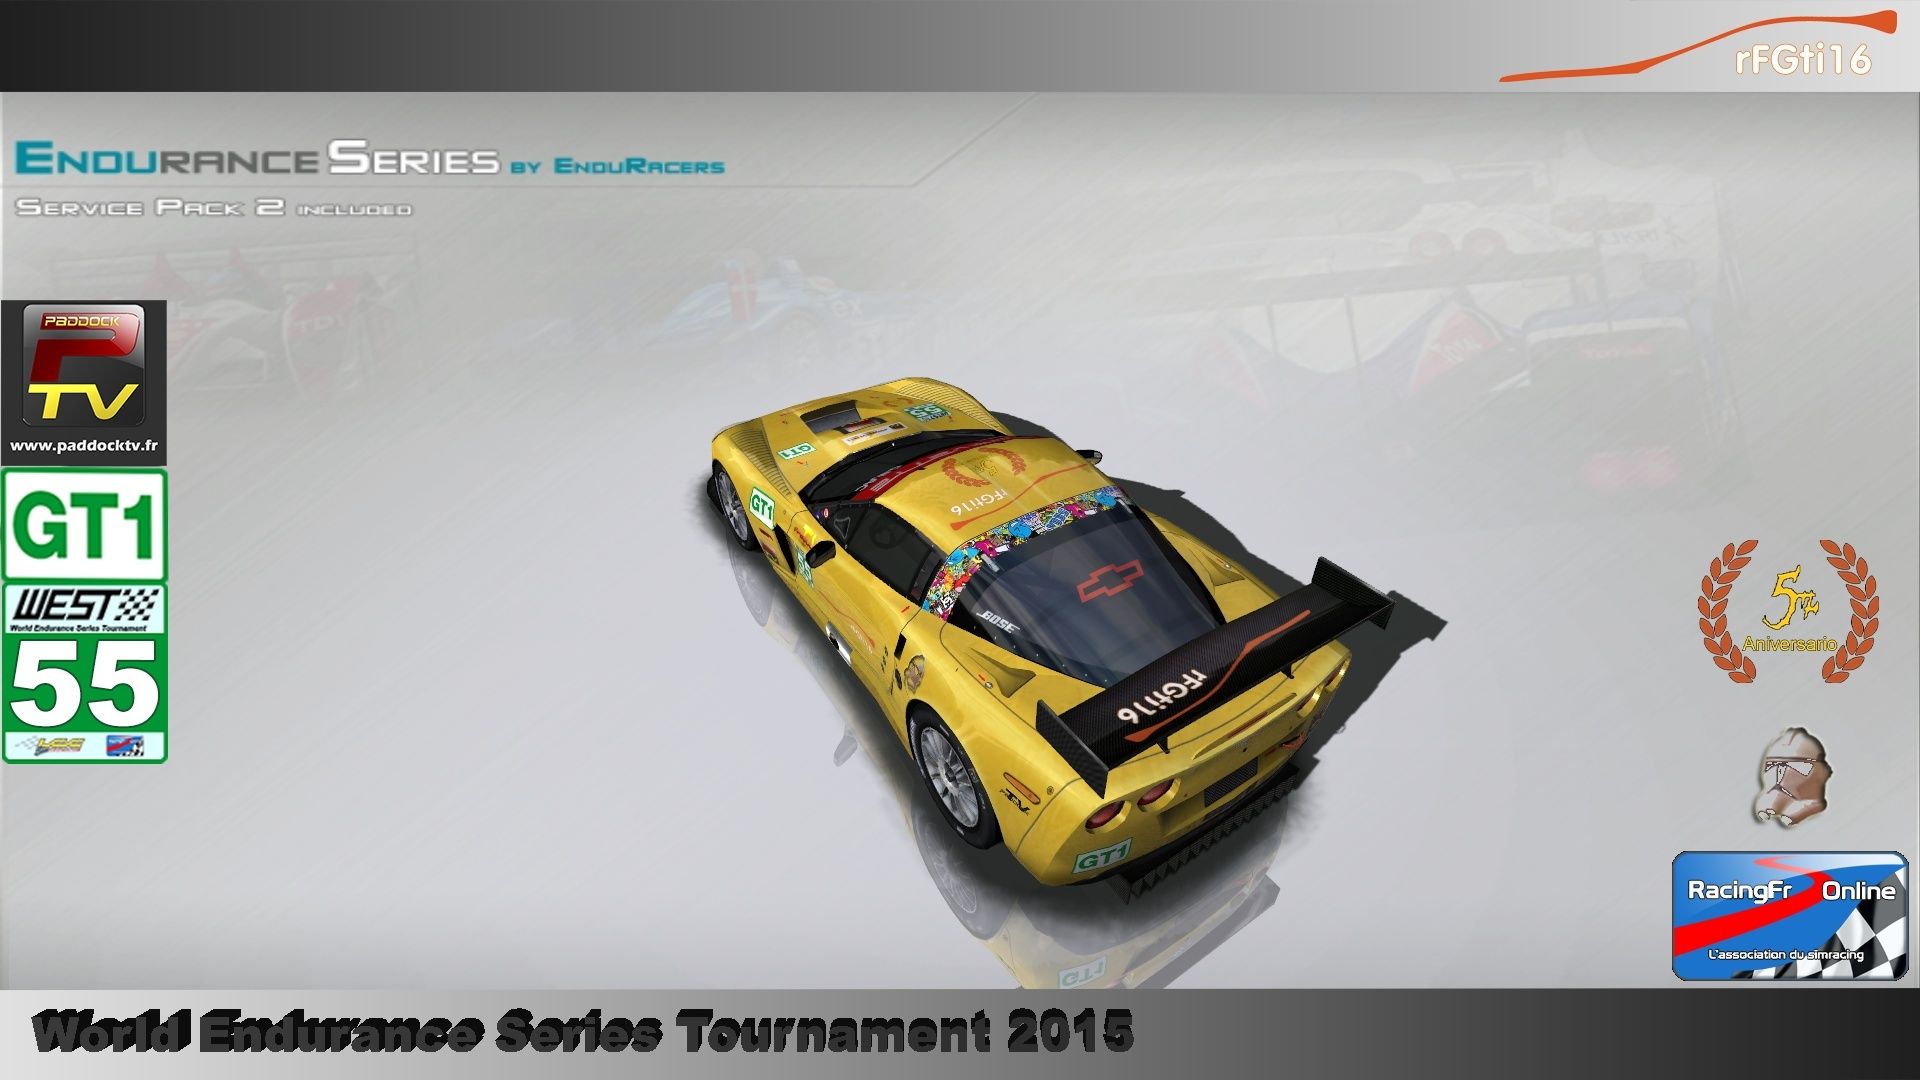 WEST 2015 Endurance Series championship P2/GT1 00510